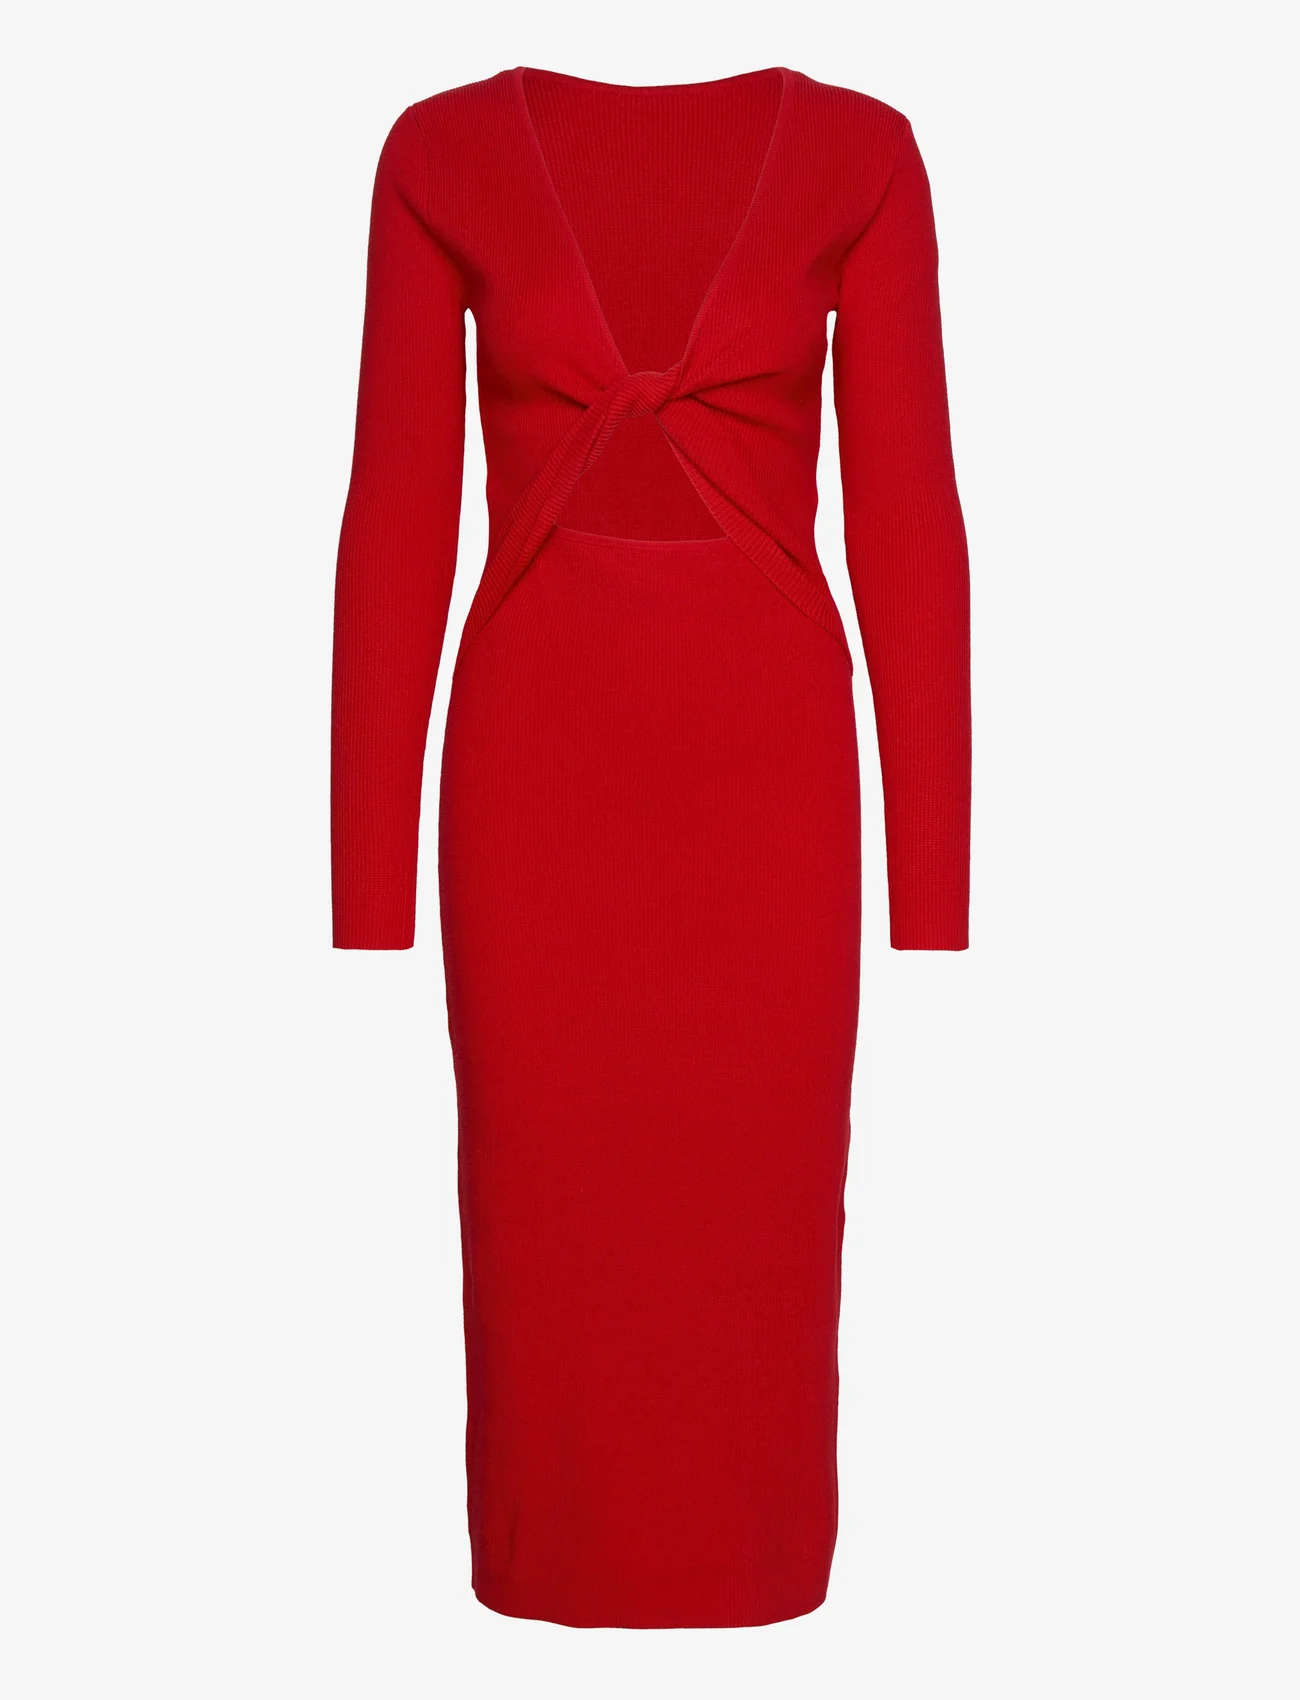 bzr - Lela Jenner dress - stramme kjoler - fiery red - 0